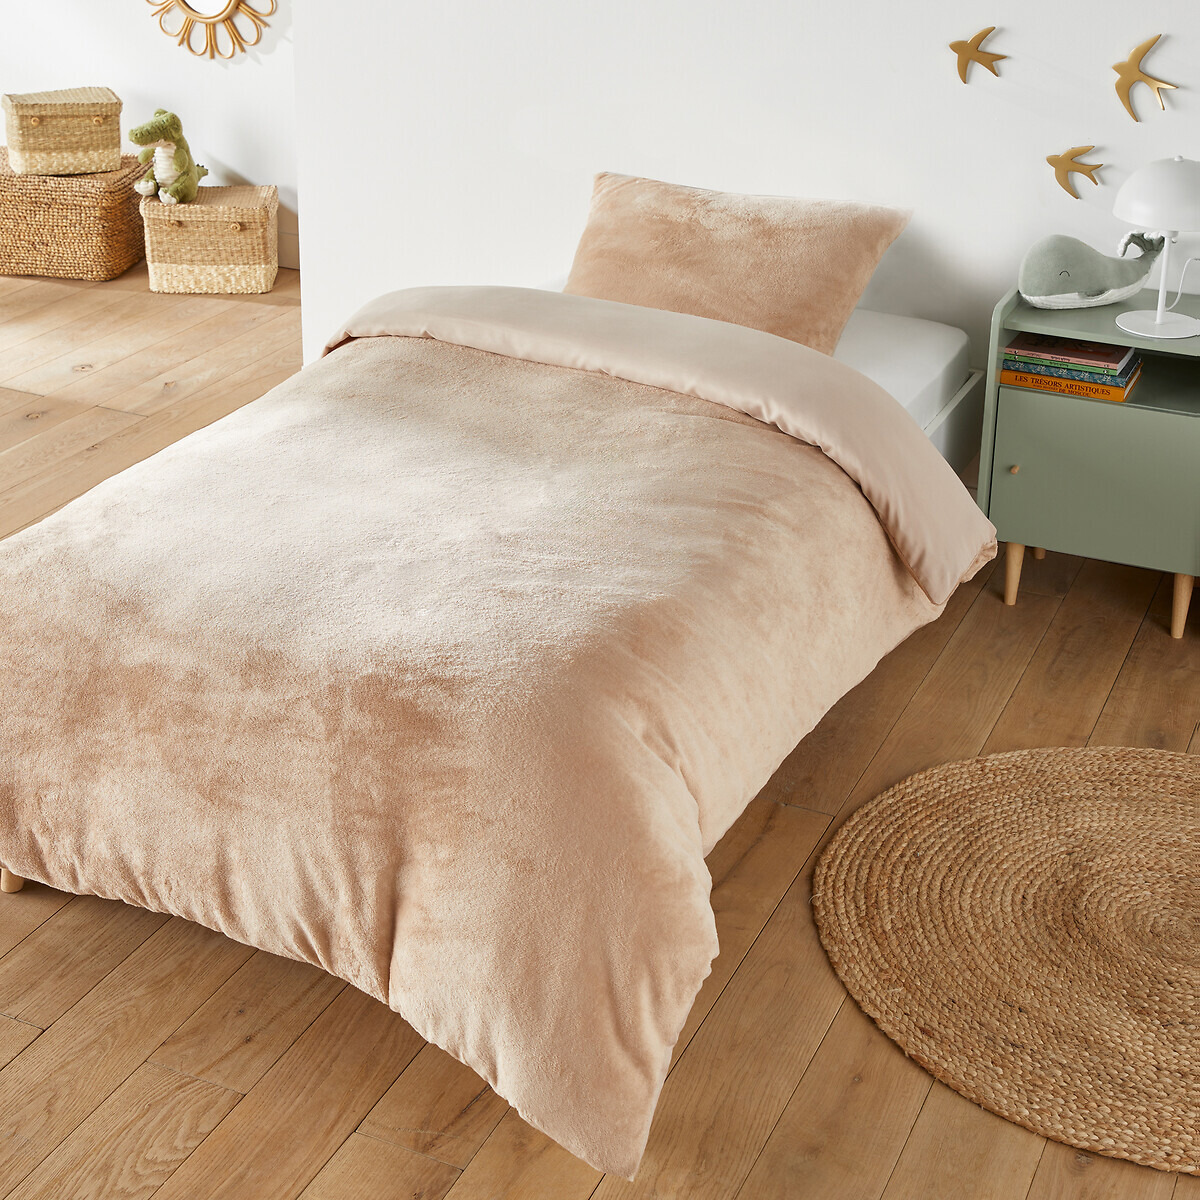 Child's Fleece Bed Set with Rectangular Pillow - image 1